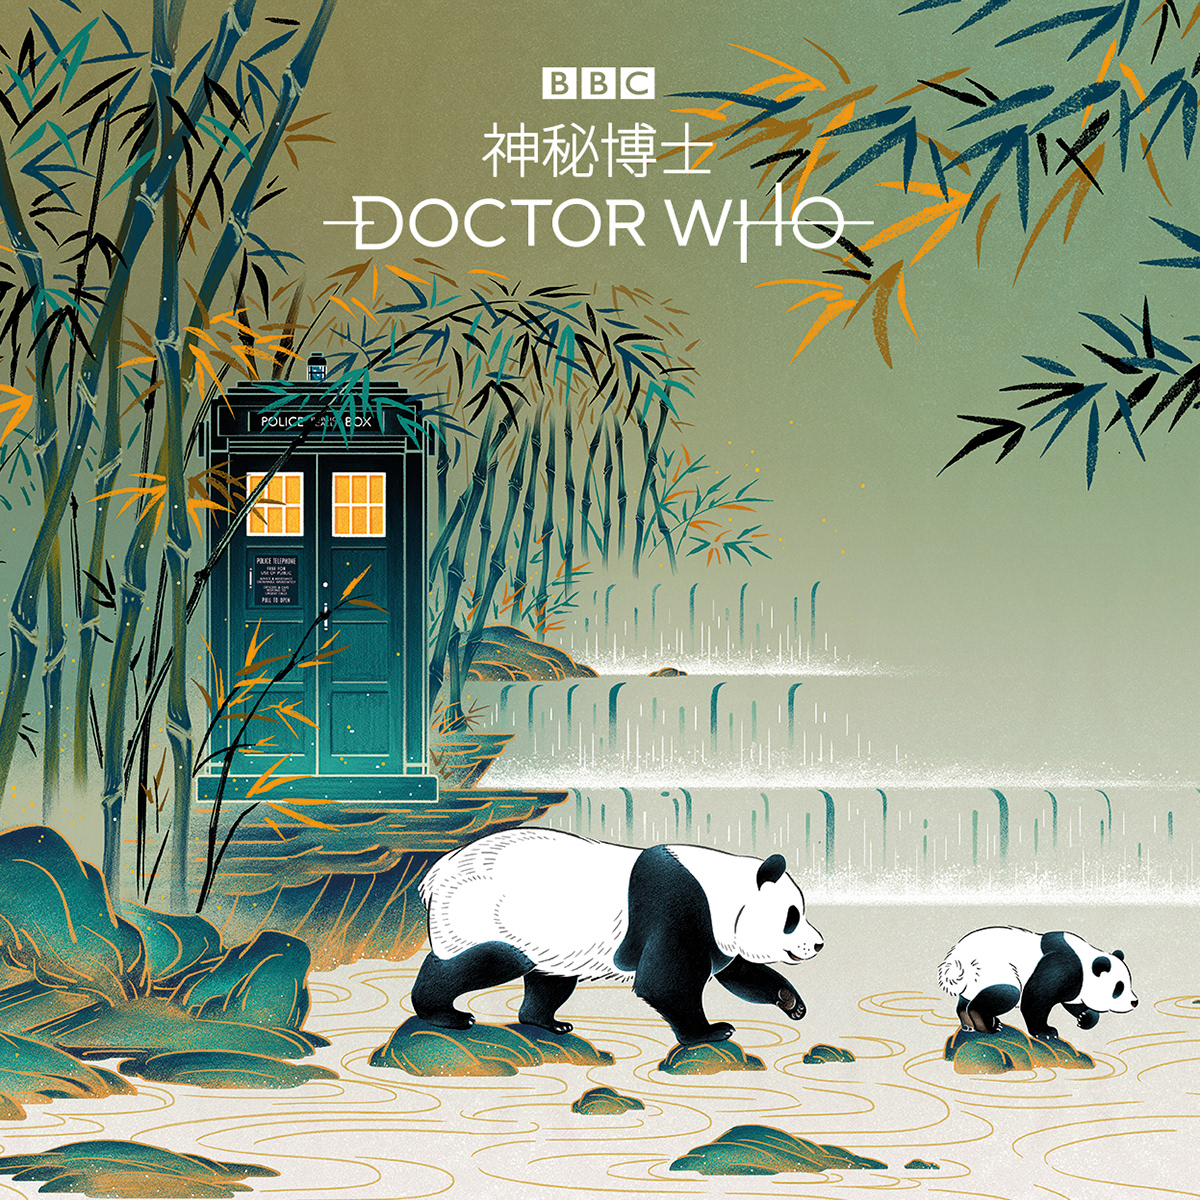 ILLUSTRATION  Drawing  Advertising  Doctor Who tardis art Digital Art  asian style poster Poster Design